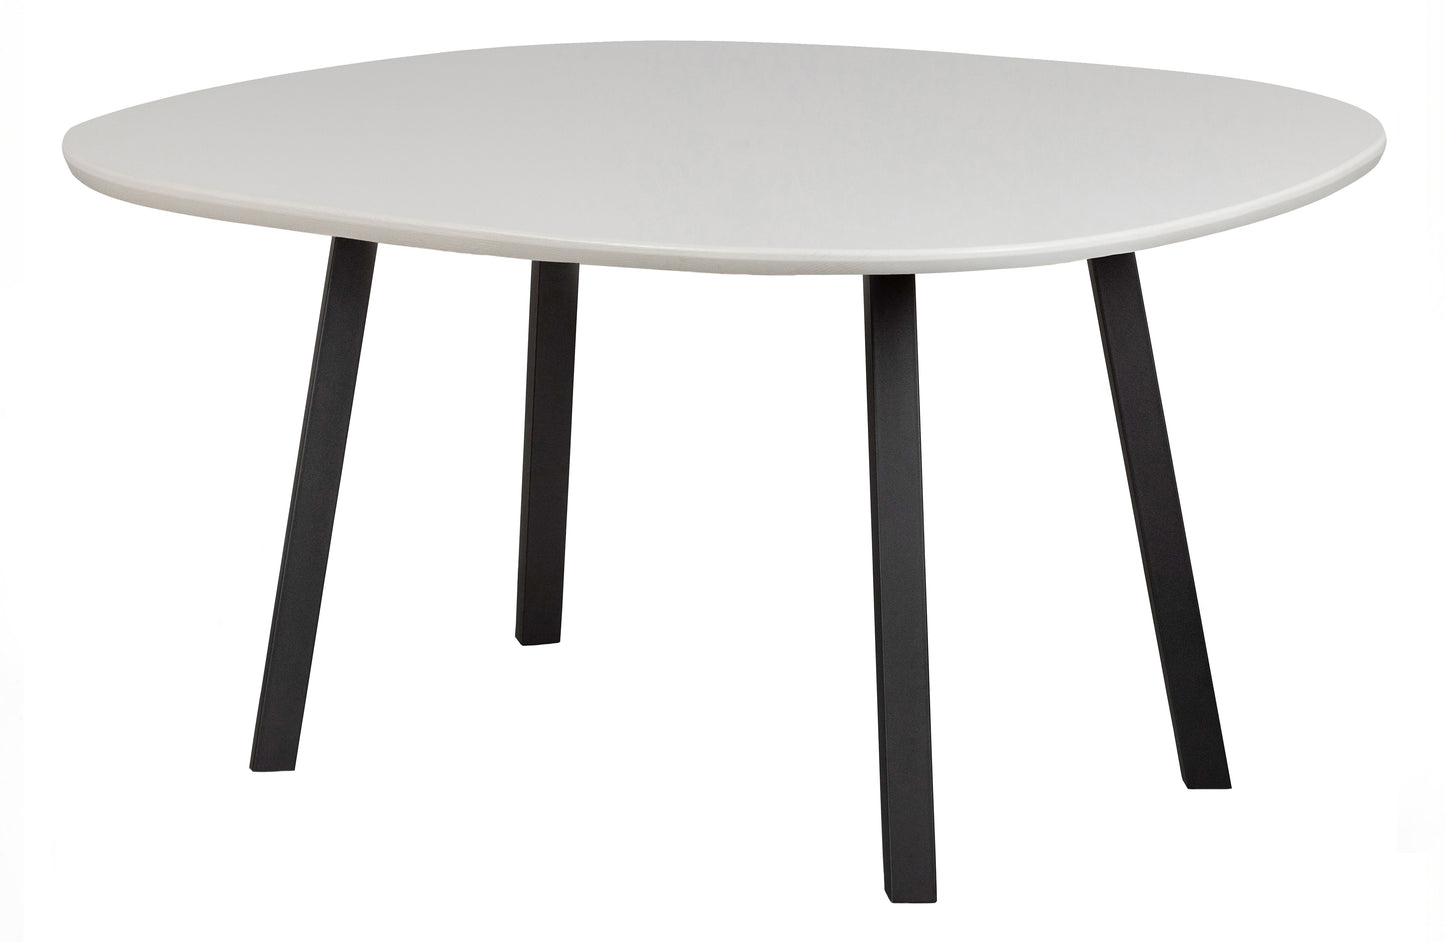 Tablo Table Ash Mist Organic 130x130 [fsc] Square Leg